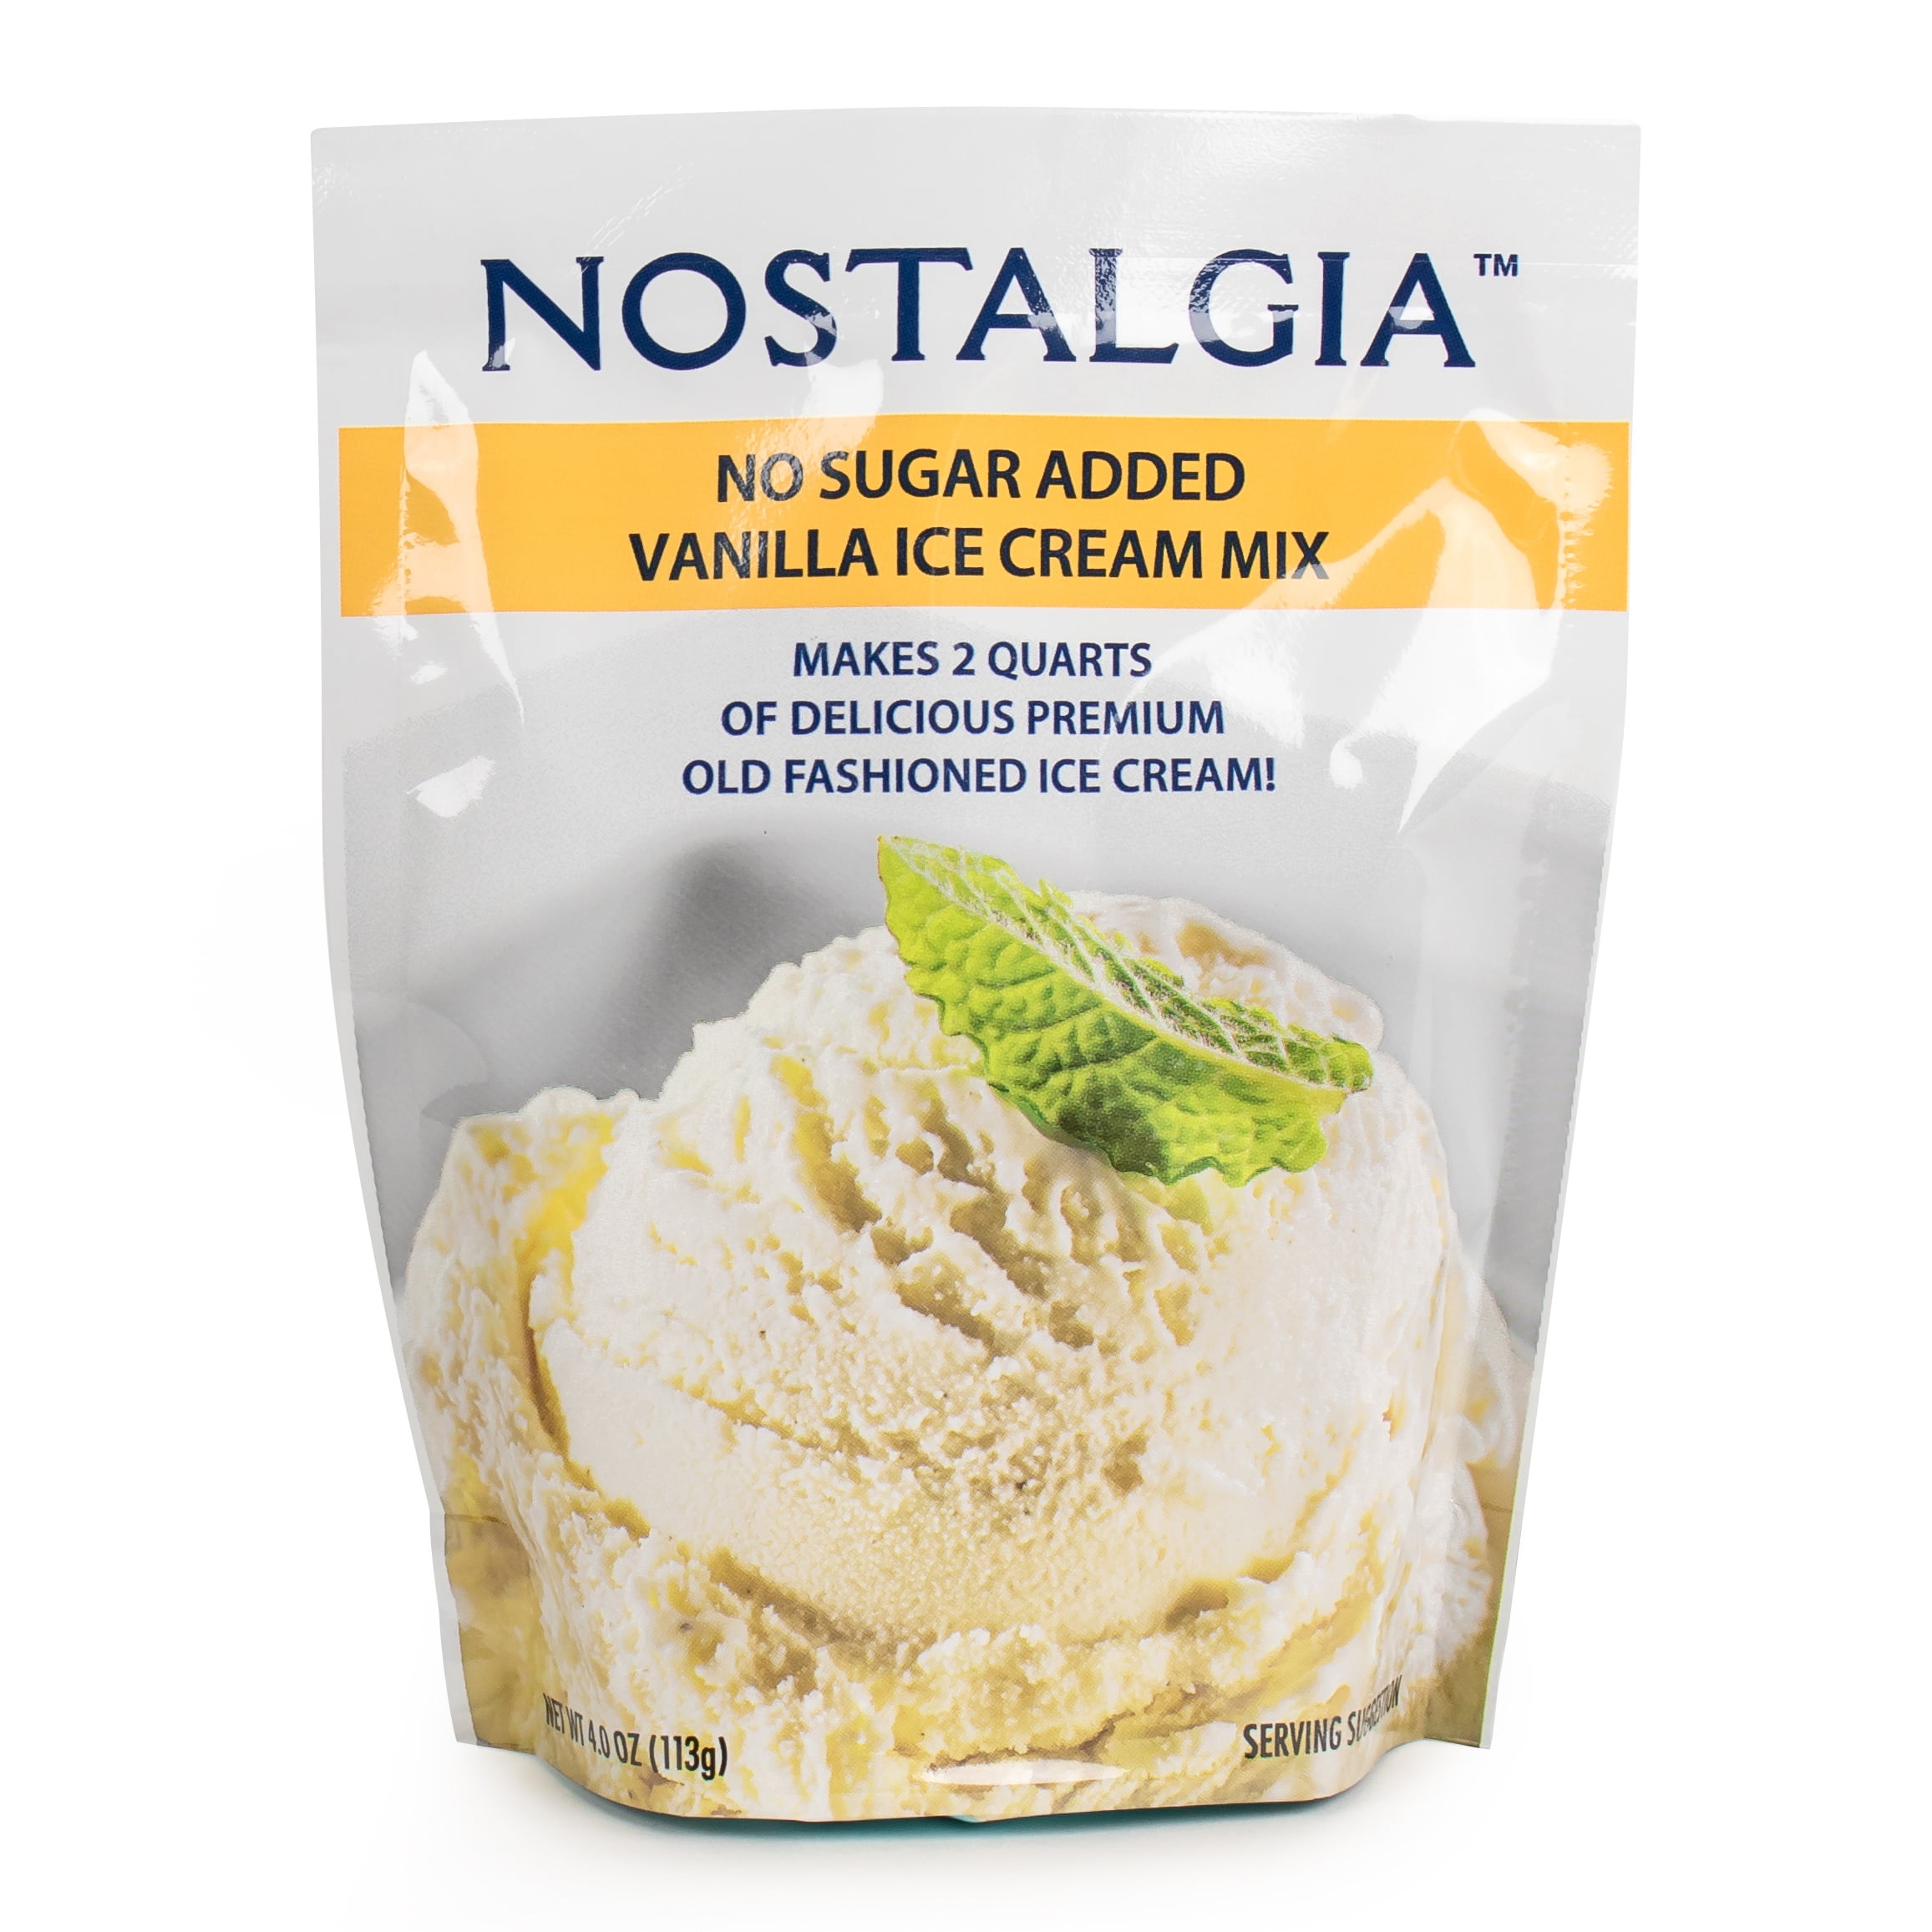 Nostalgia Vanilla Ice Cream Mix No Sugar Added Makes 2 quarts 2 Pack Each 4 Oz 